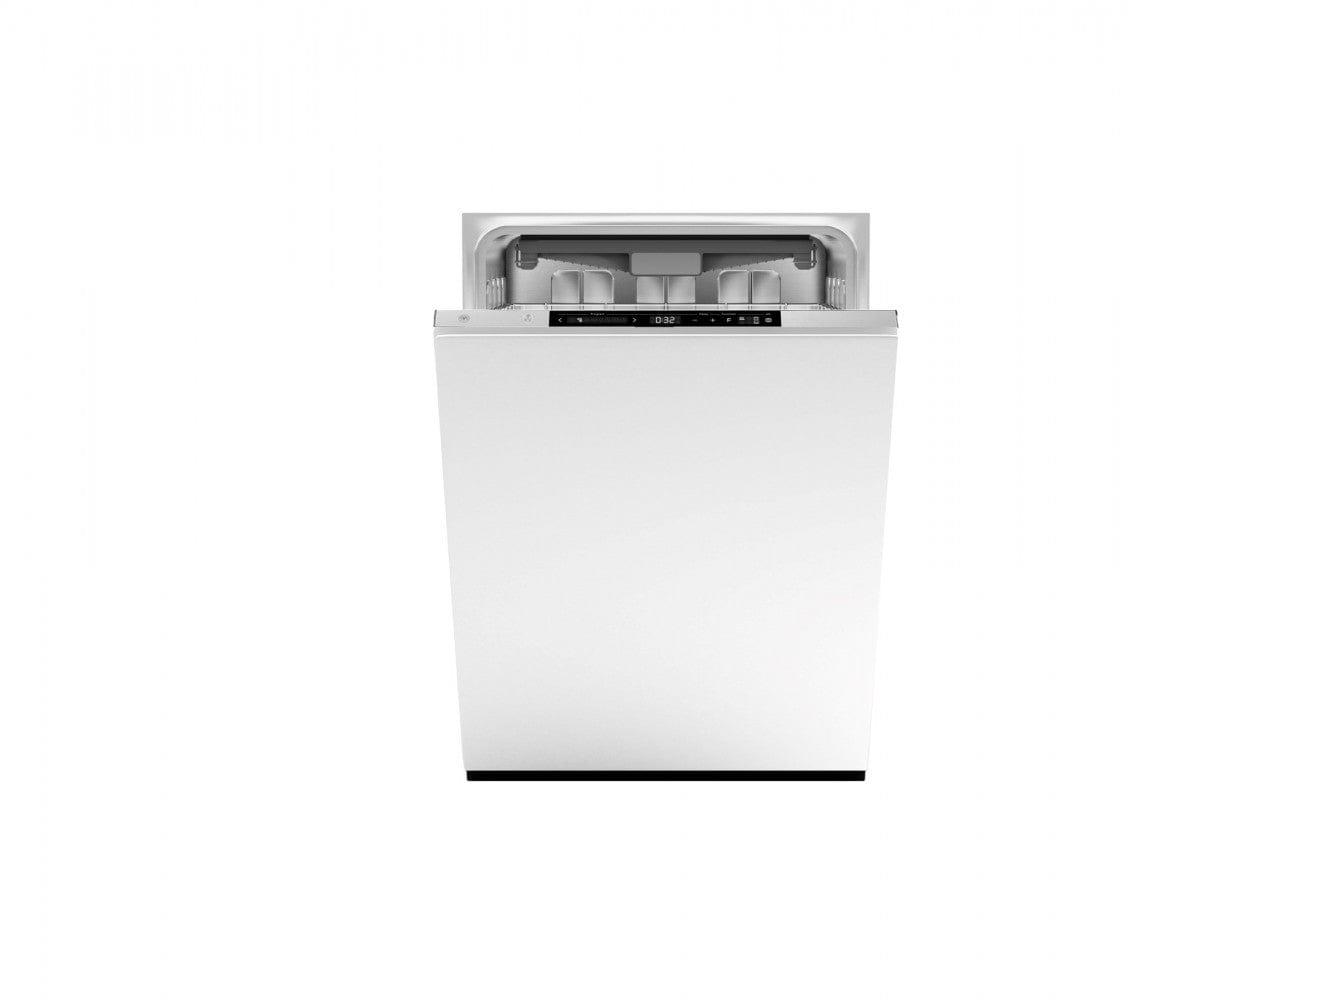 غسالة صحون بلت ان بعرض 60 سم برتازوني Bertazzoni Heritage Series Fully Integrated Dishwasher